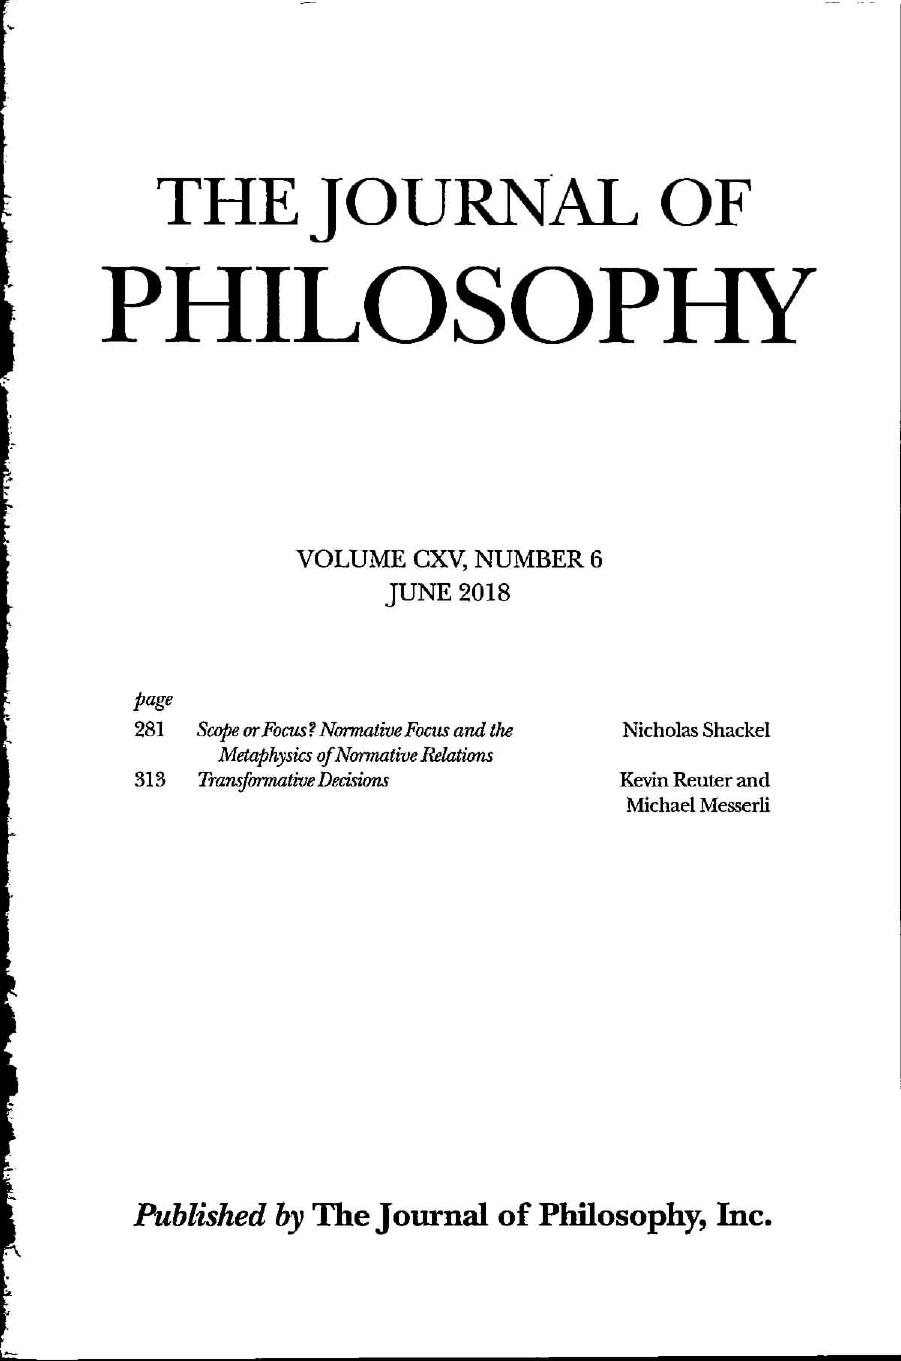 The Journal of Philosophy - Volume CXV, Number 6 - June 2018